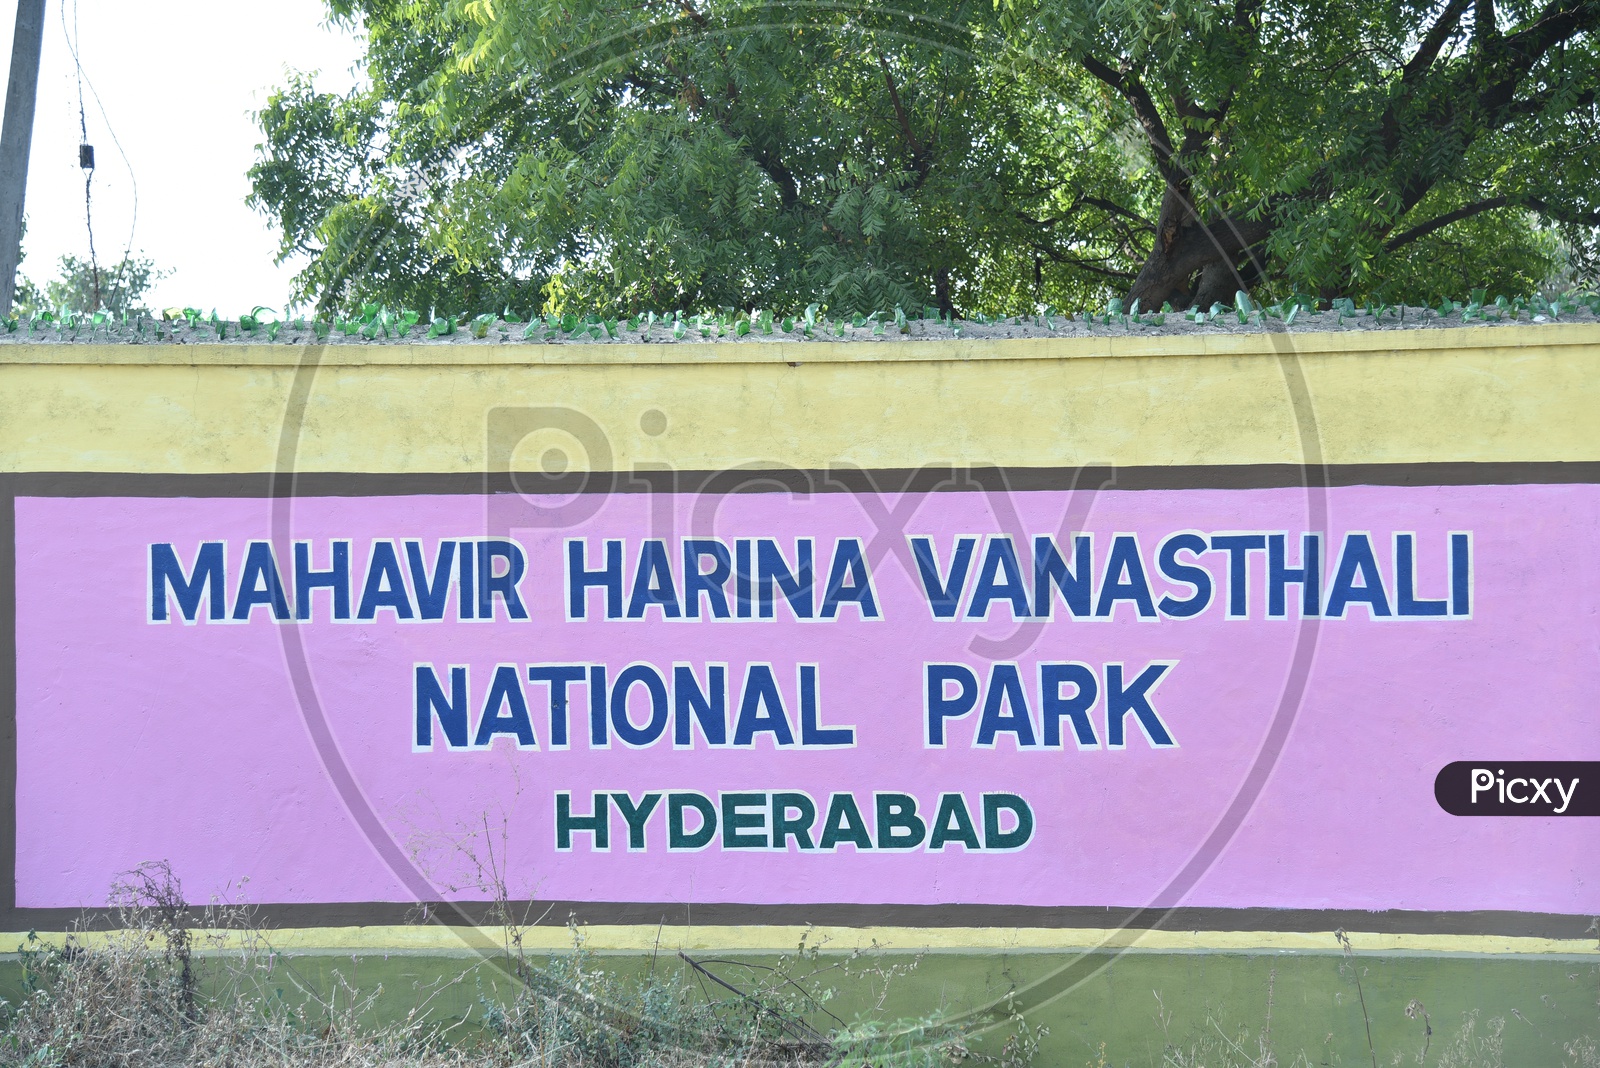 Mahavir Harina Vanasthali National Park, Mahavir Harina Vanasthali National Park, Auto Nagar, Hyderabad, Telangana, India